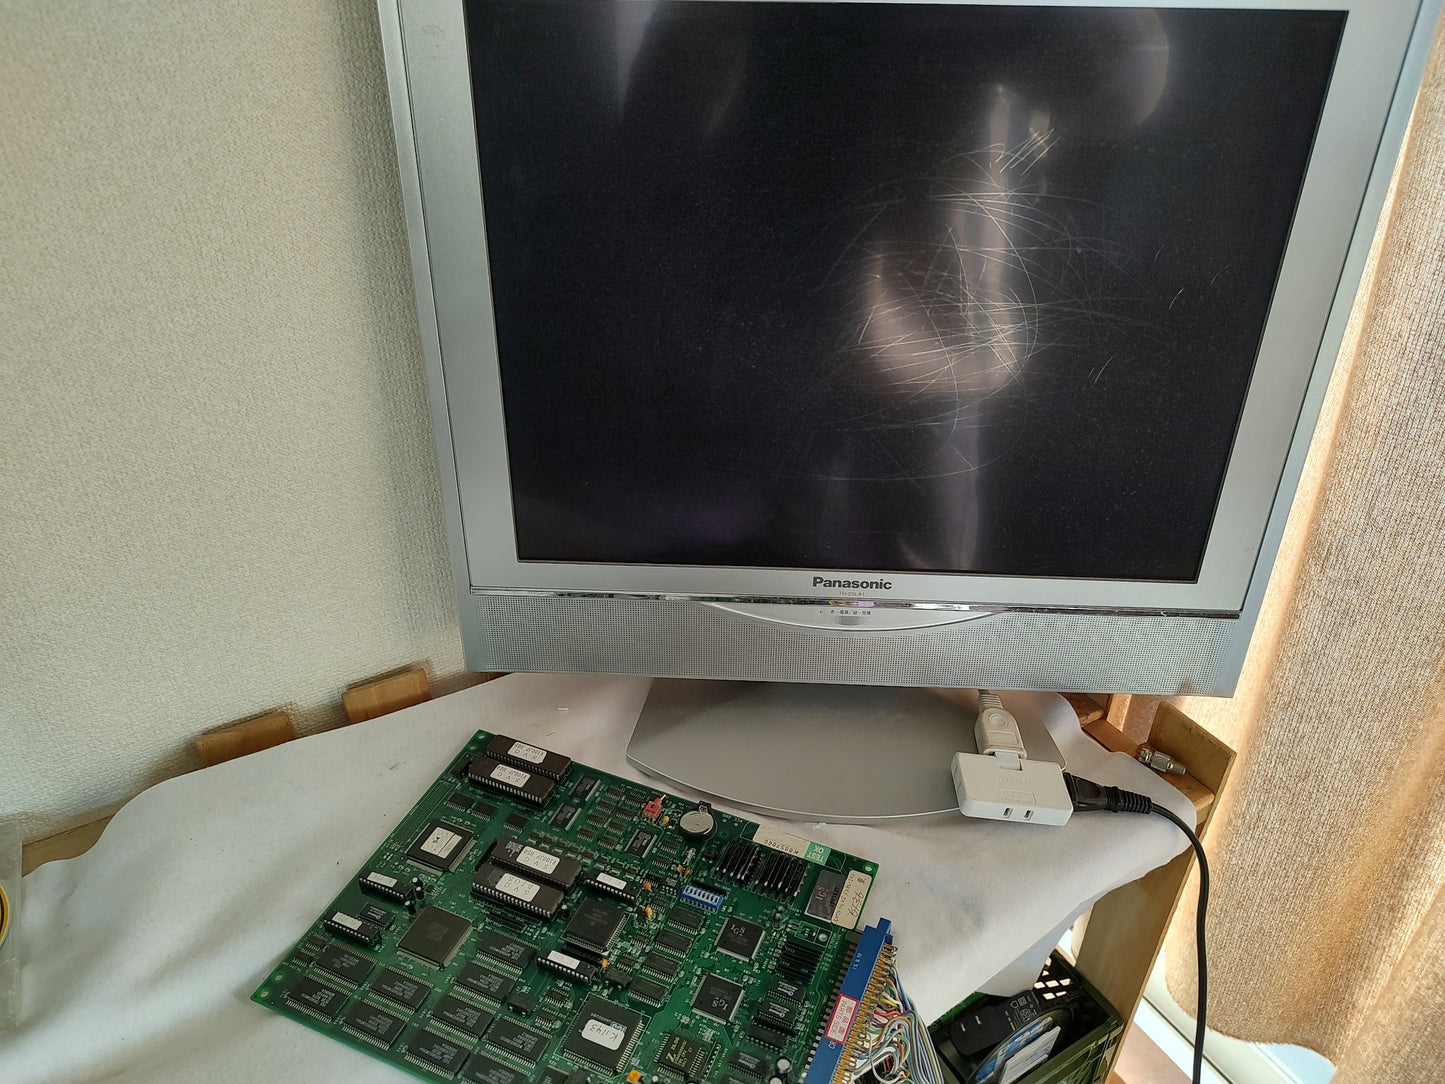 Spectral Vs. Generation Arcade AMI PCB System JAMMA Board, Working-g0212-